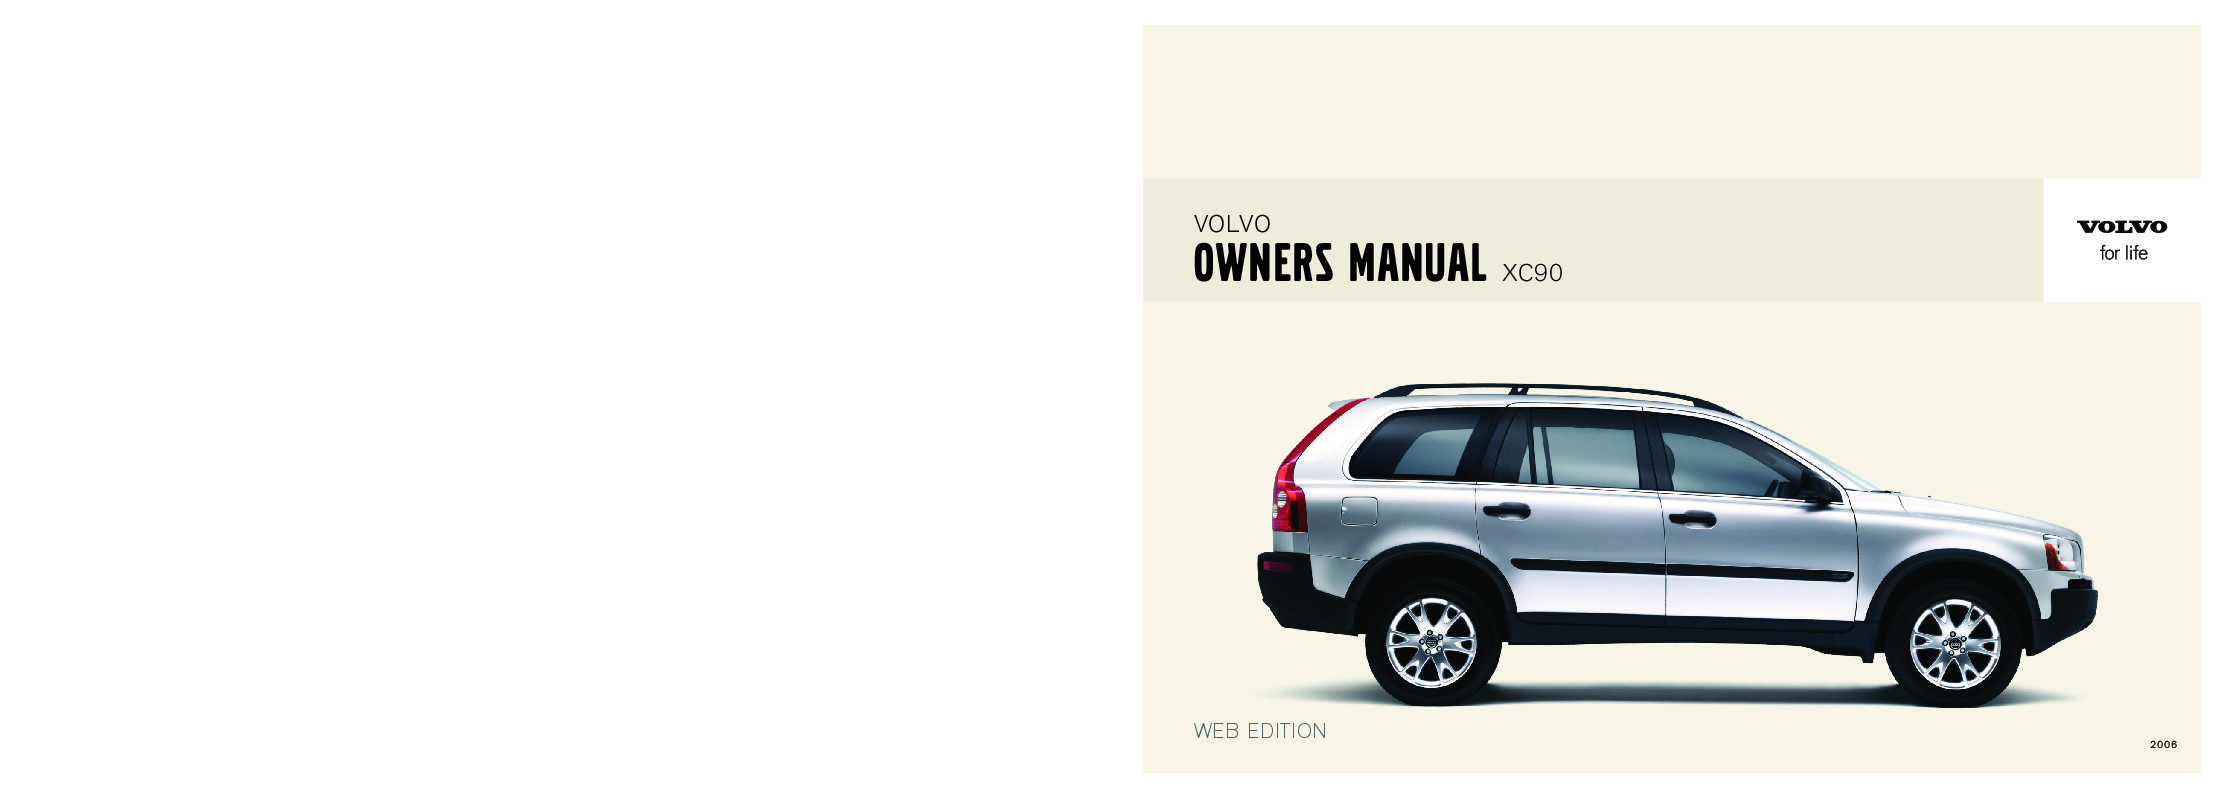 volvo xc90 repair manual pdf free